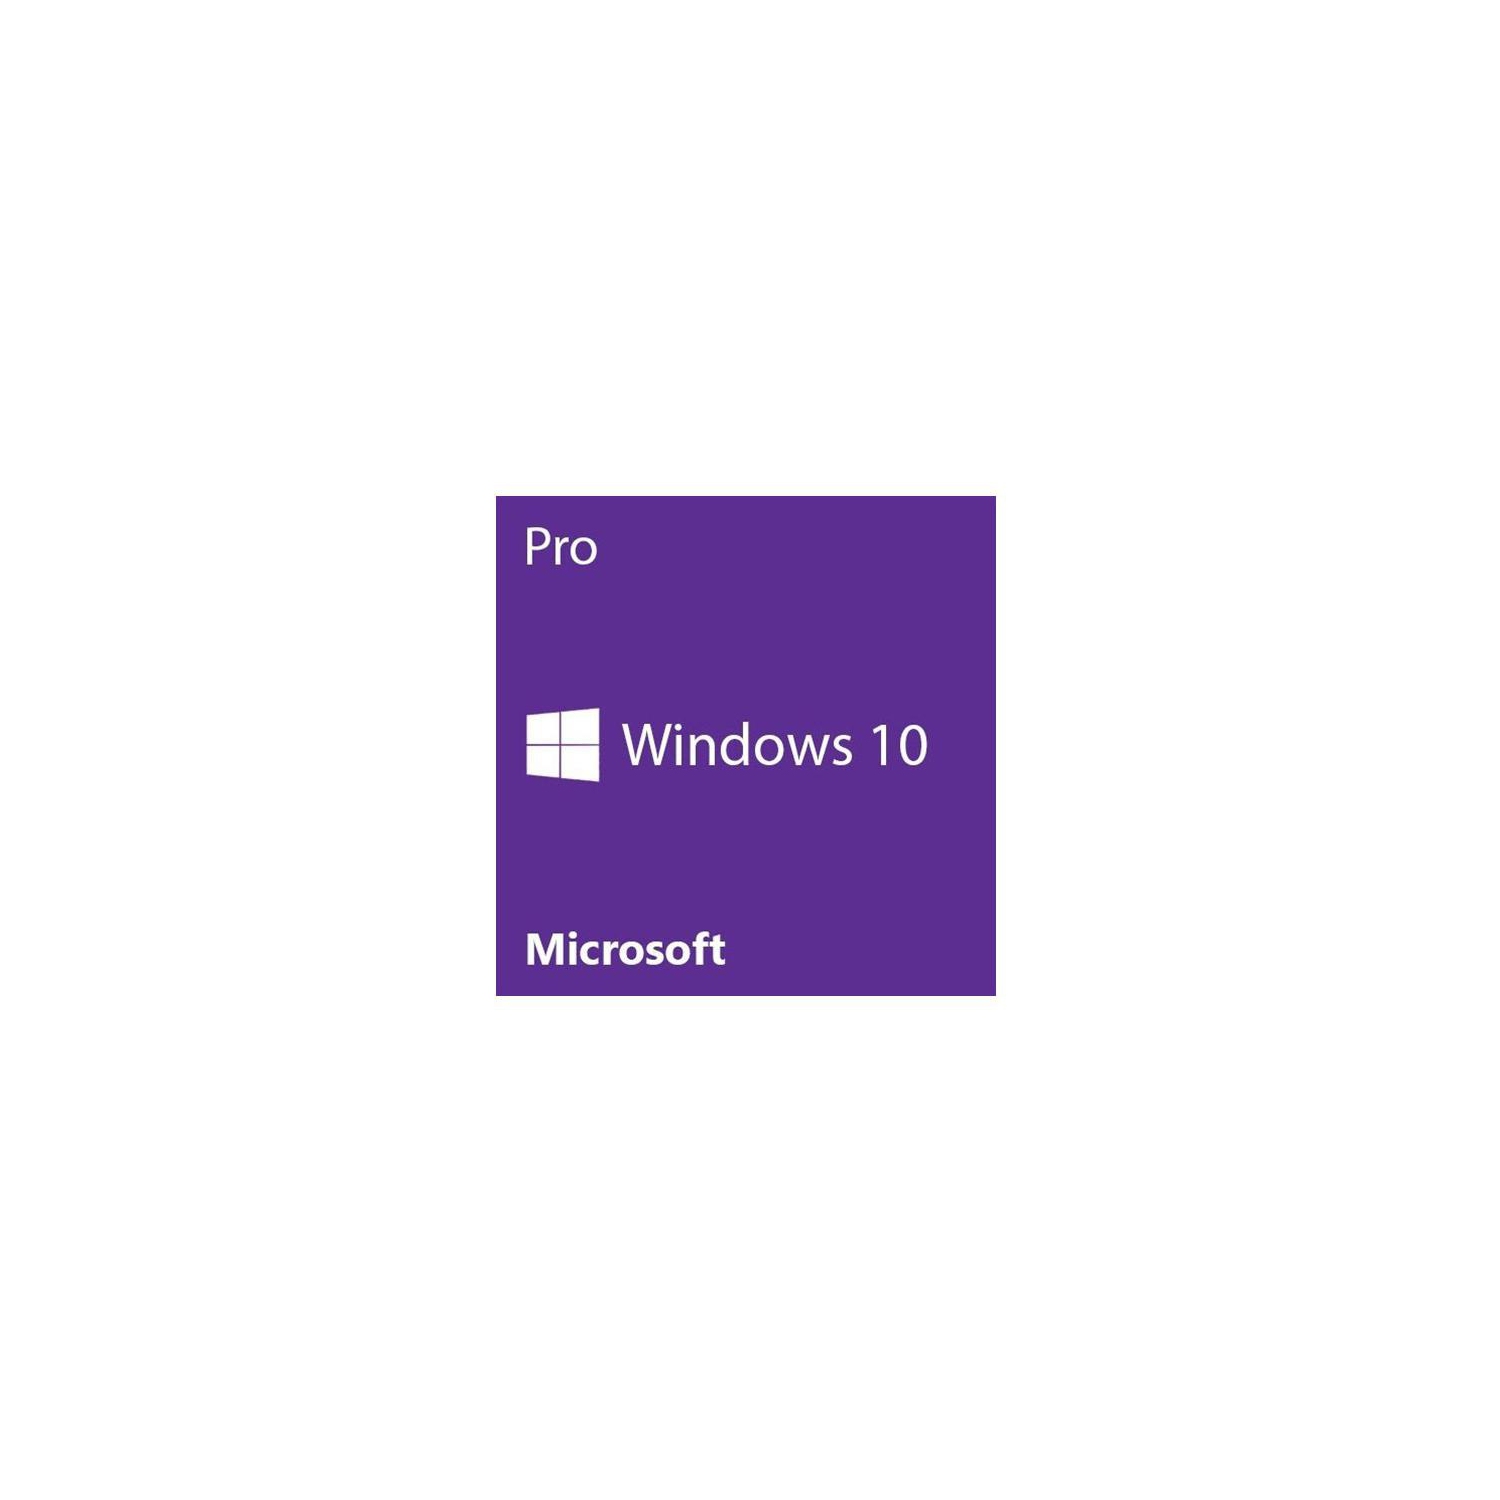 Microsoft Windows 10 Pro (32-bit/64-bit, Download) - 1 License